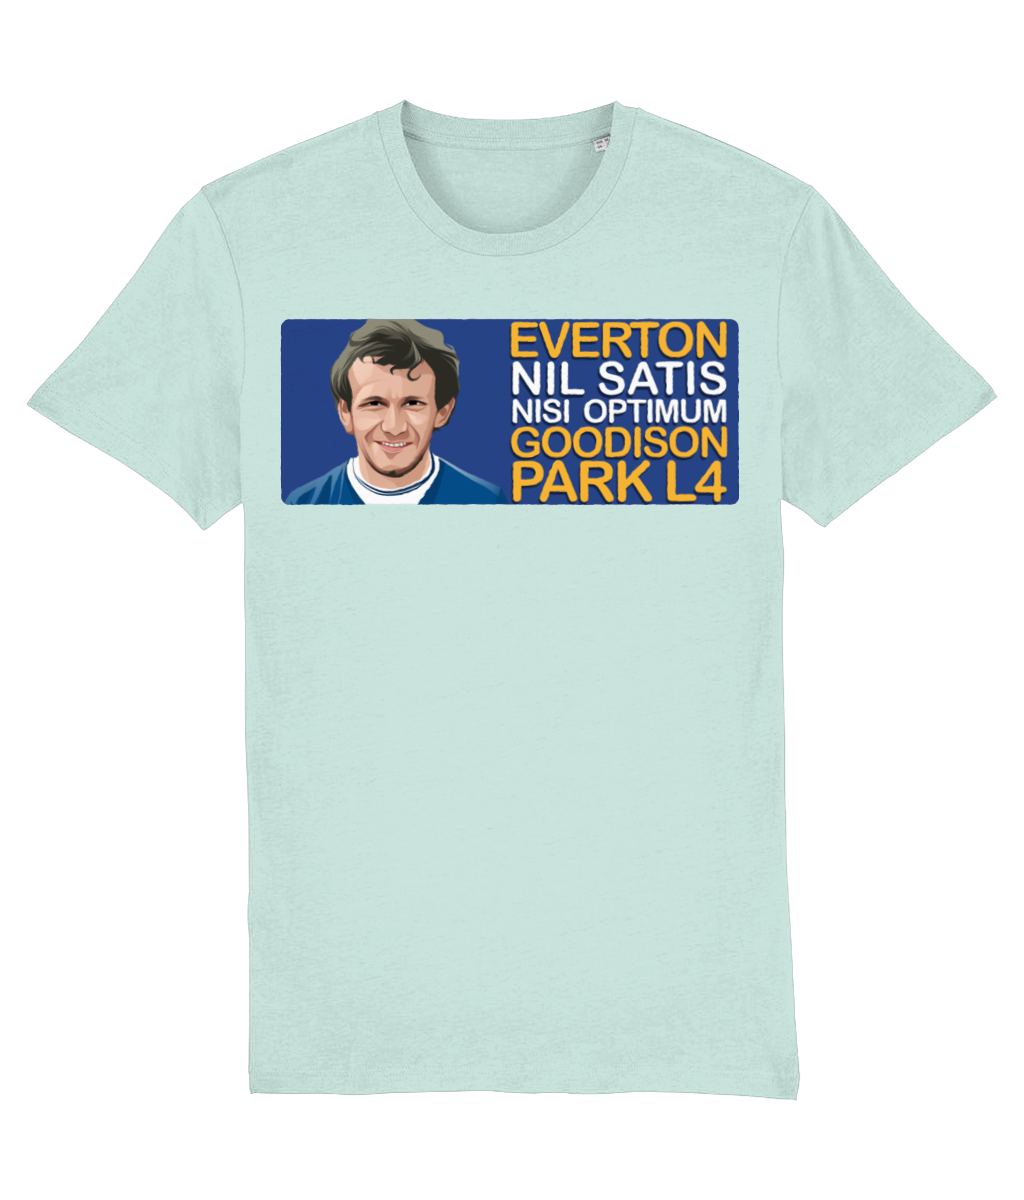 Everton Peter Reid Goodison Park L4 Unisex T-Shirt Stanley/Stella Retrotext Caribbean Blue X-Small 